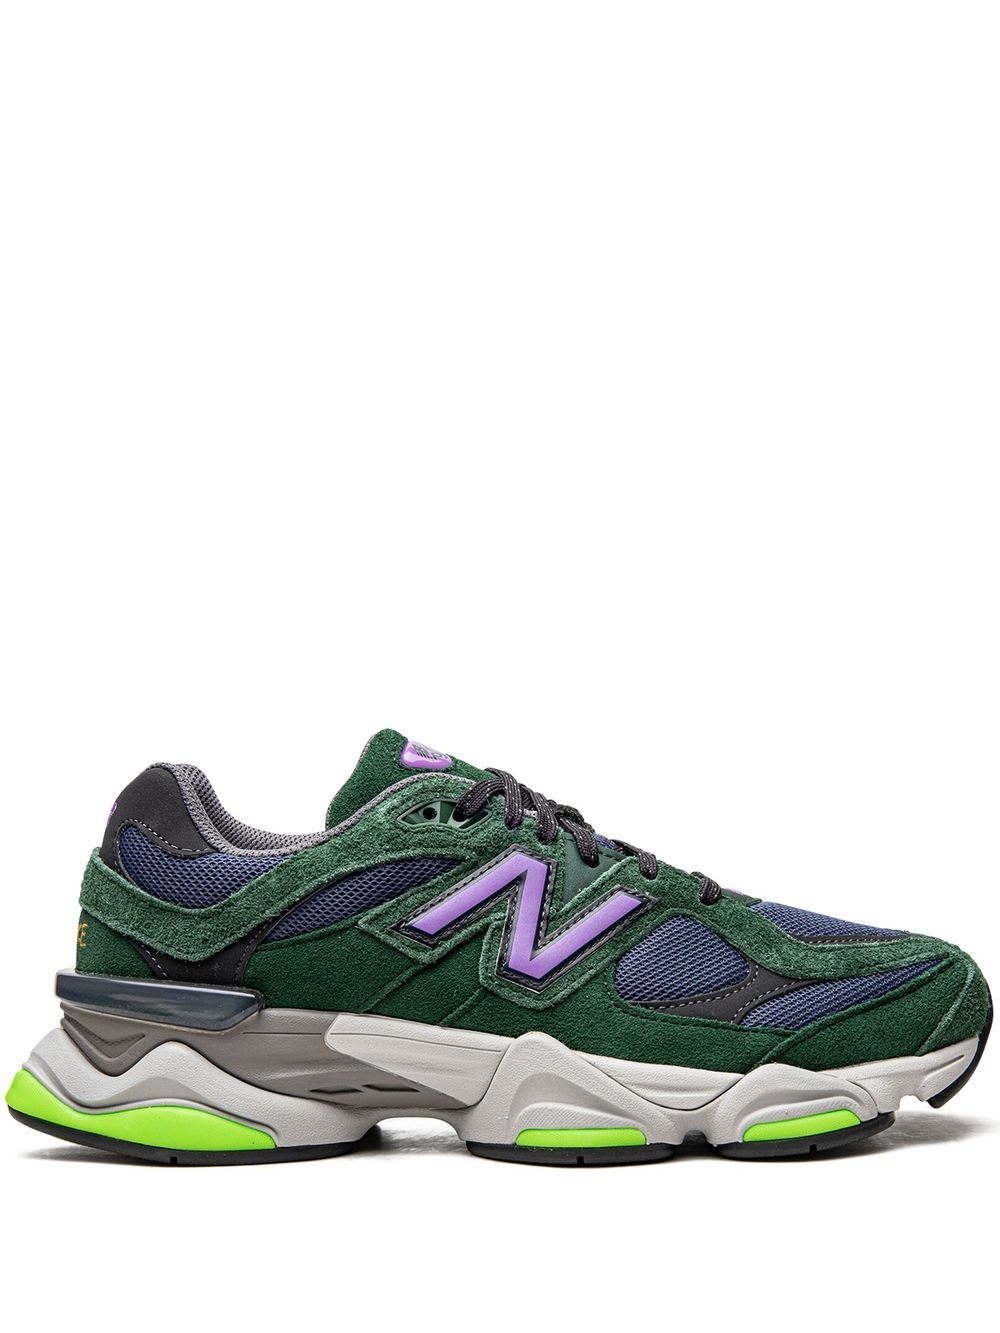 New Balance 9060 "Nightwatch Green" sneakers von New Balance